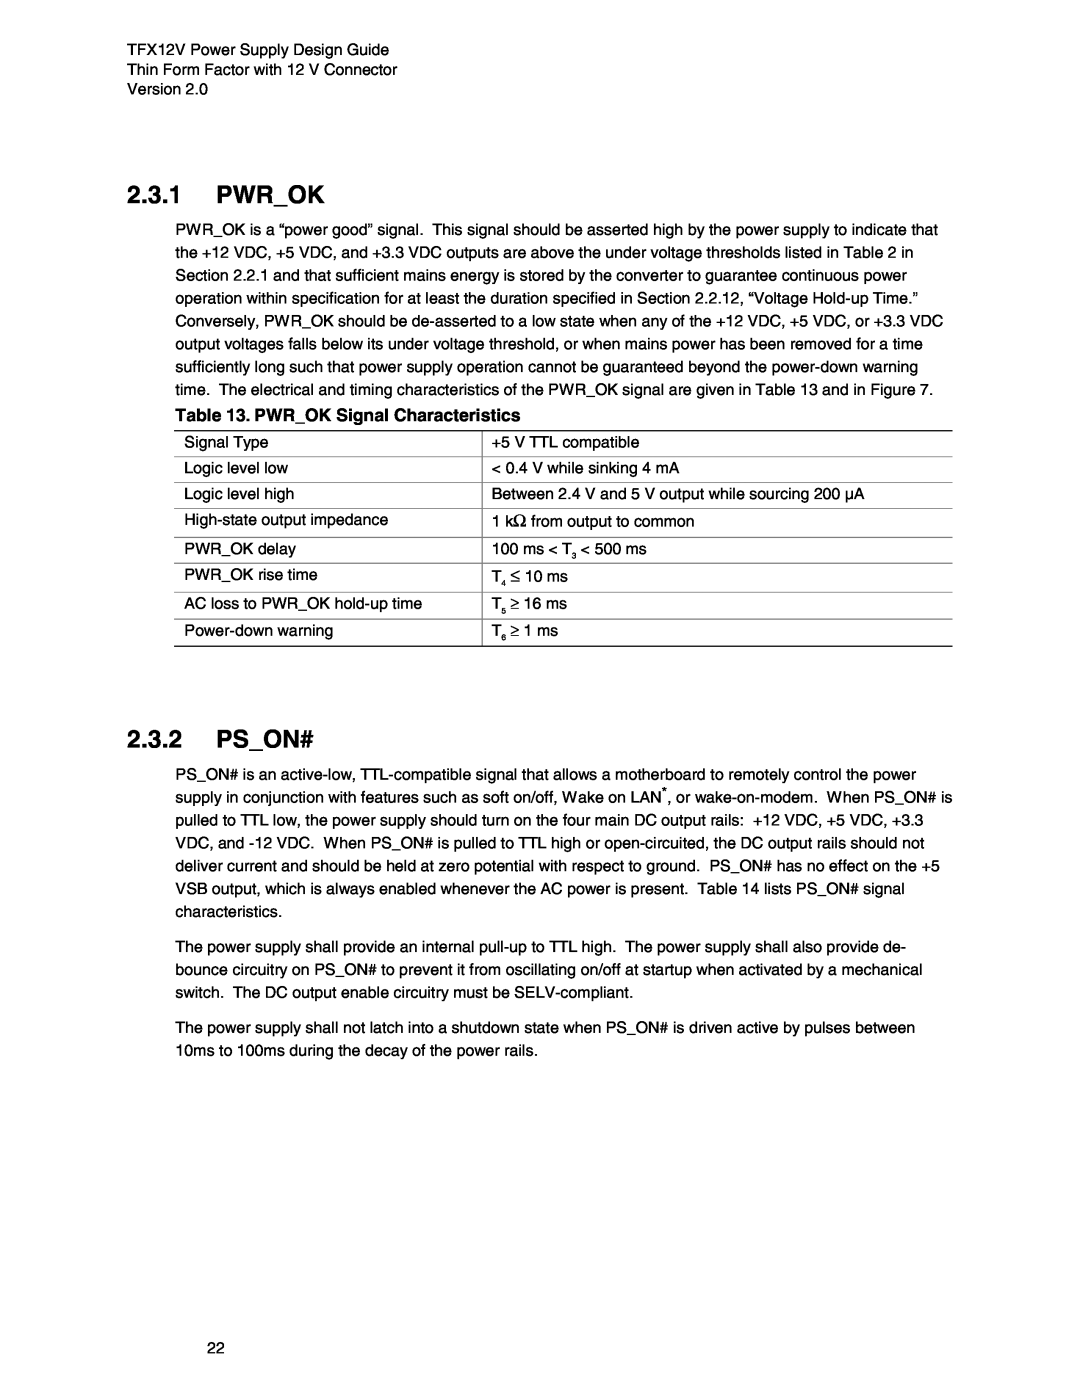 Intel TFX12V manual Pwrok, Pson#, PWROK Signal Characteristics 